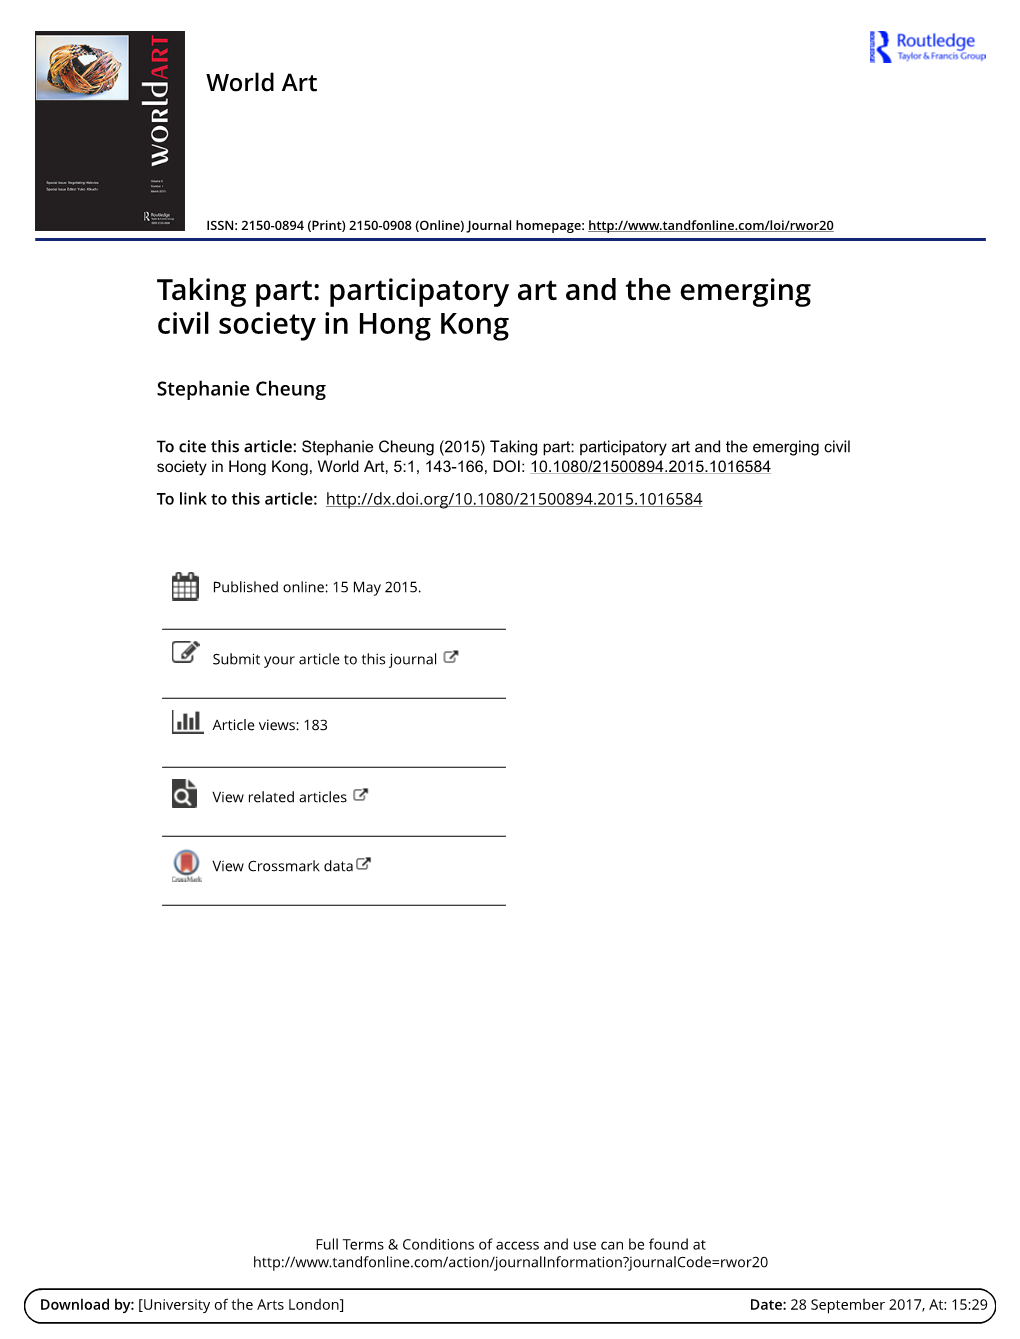 Participatory Art and the Emerging Civil Society in Hong Kong